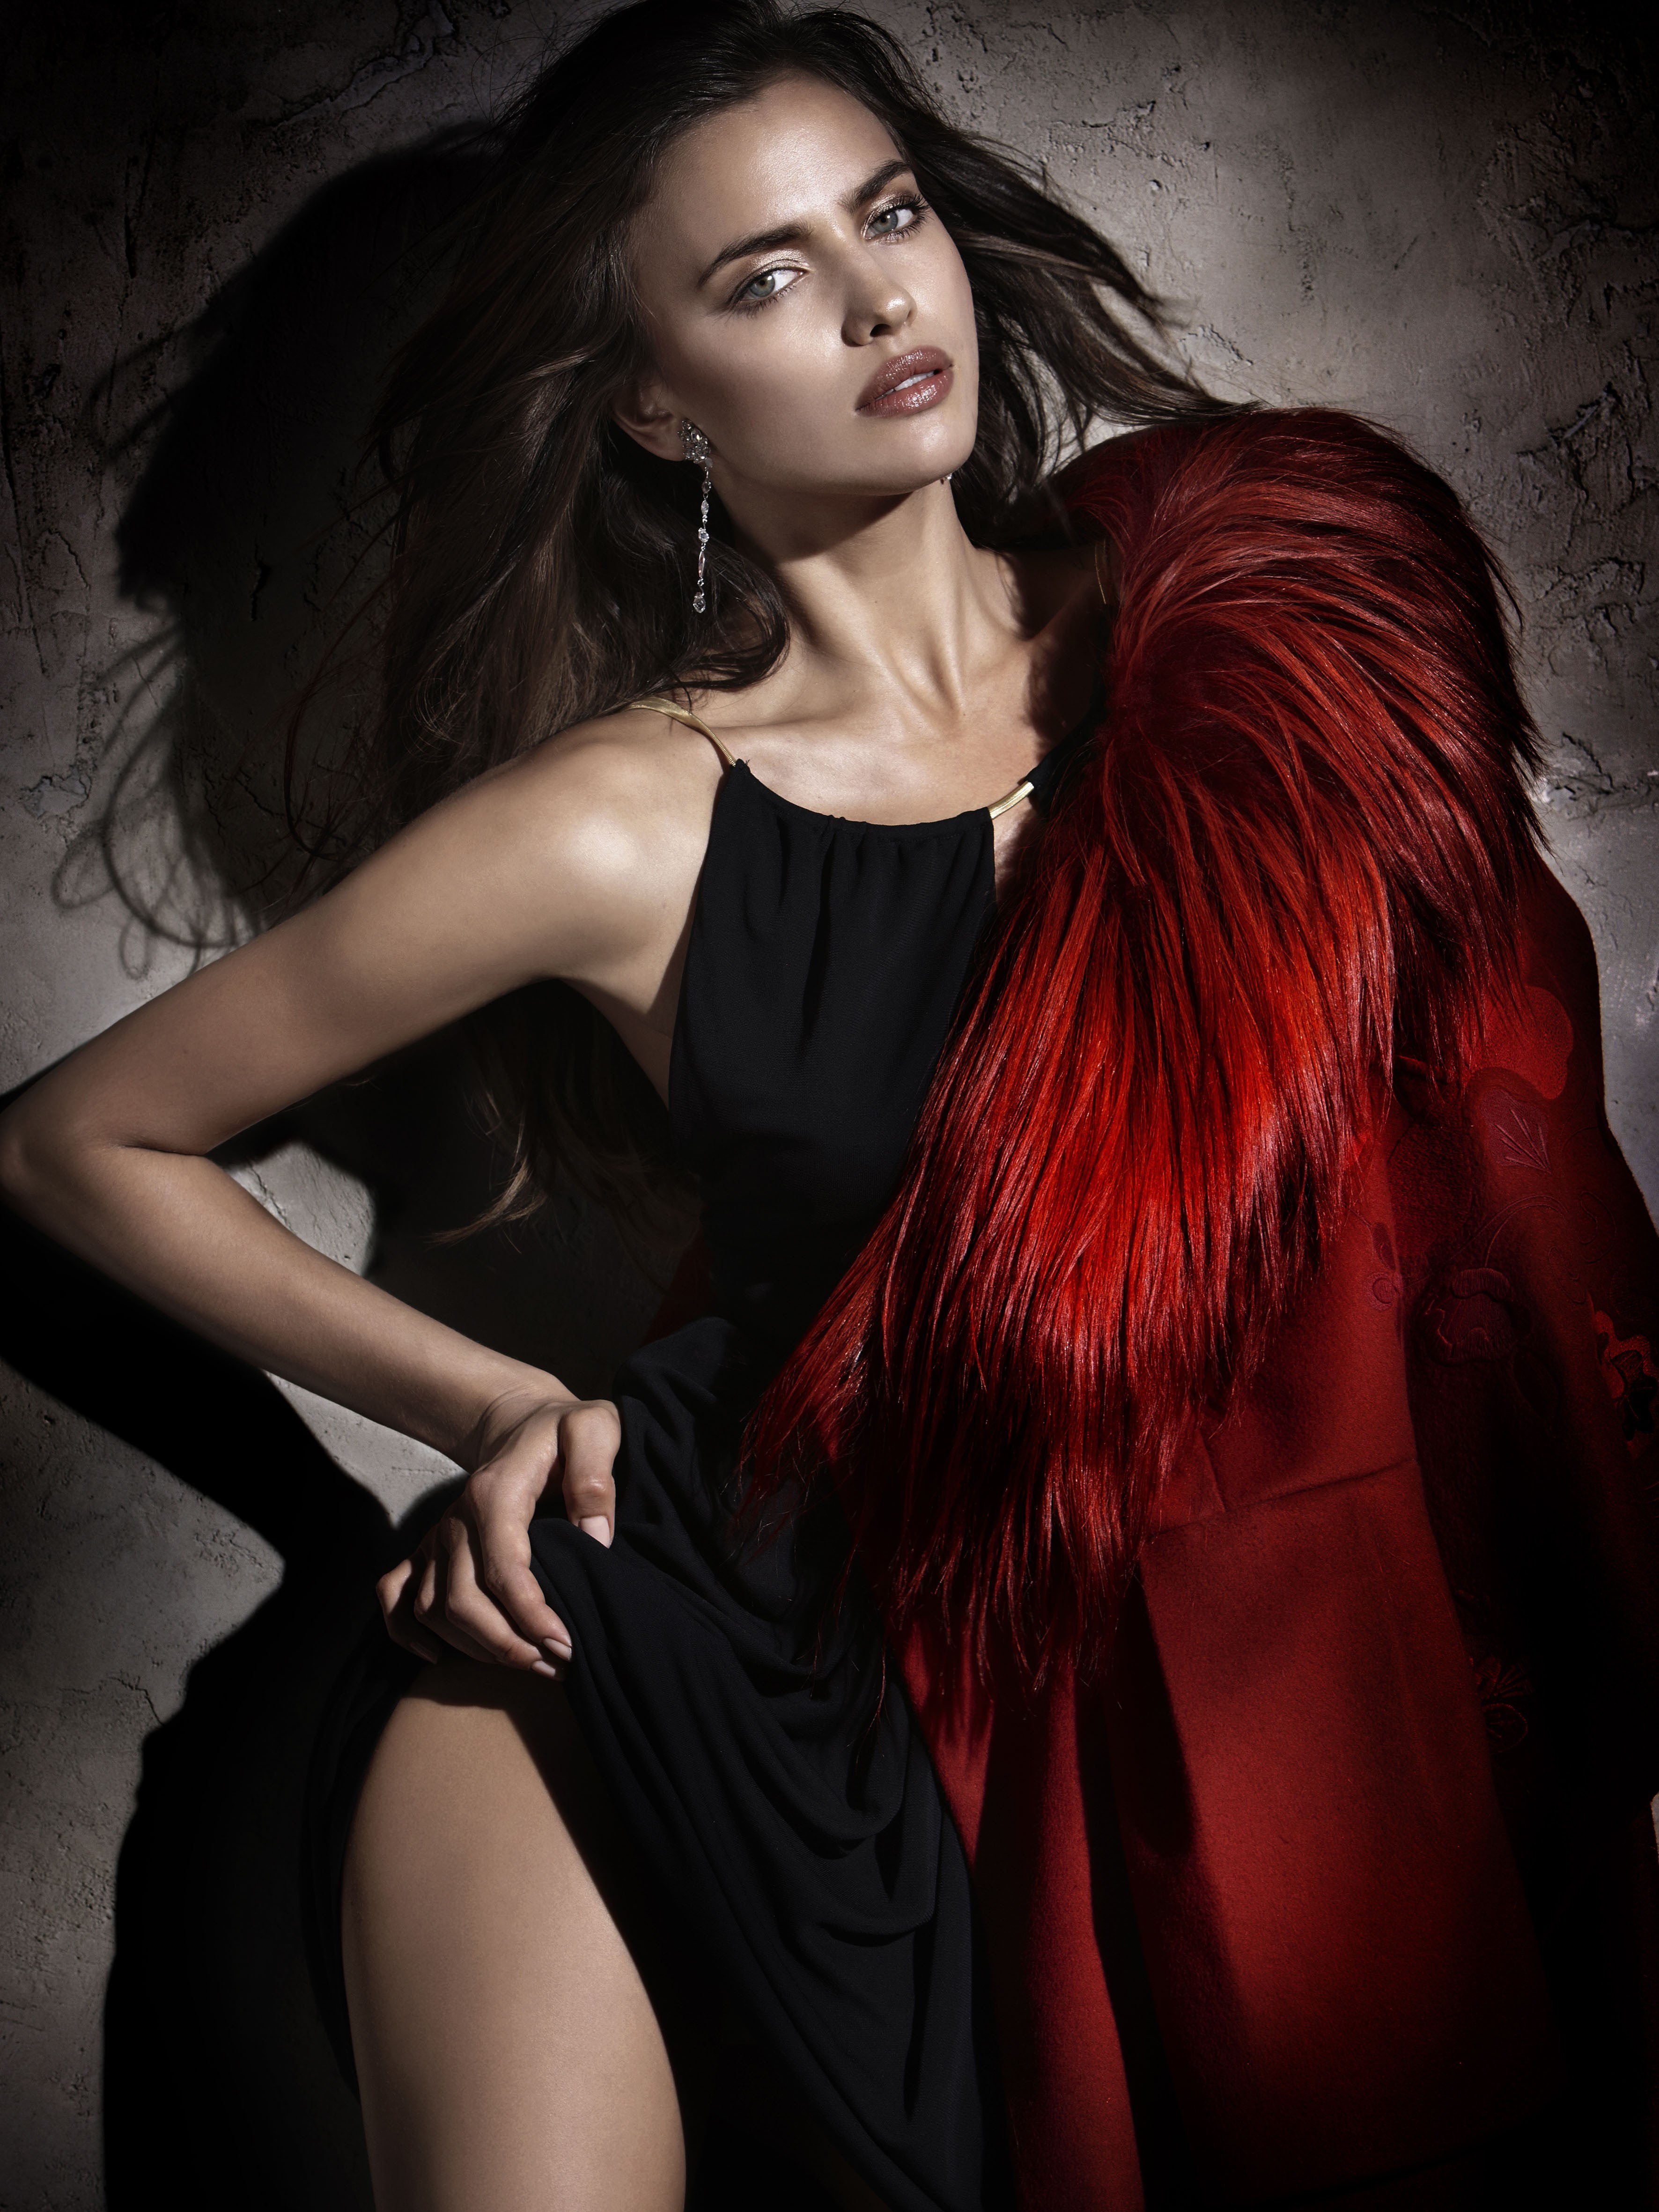 women, models, Irina Shayk - desktop wallpaper